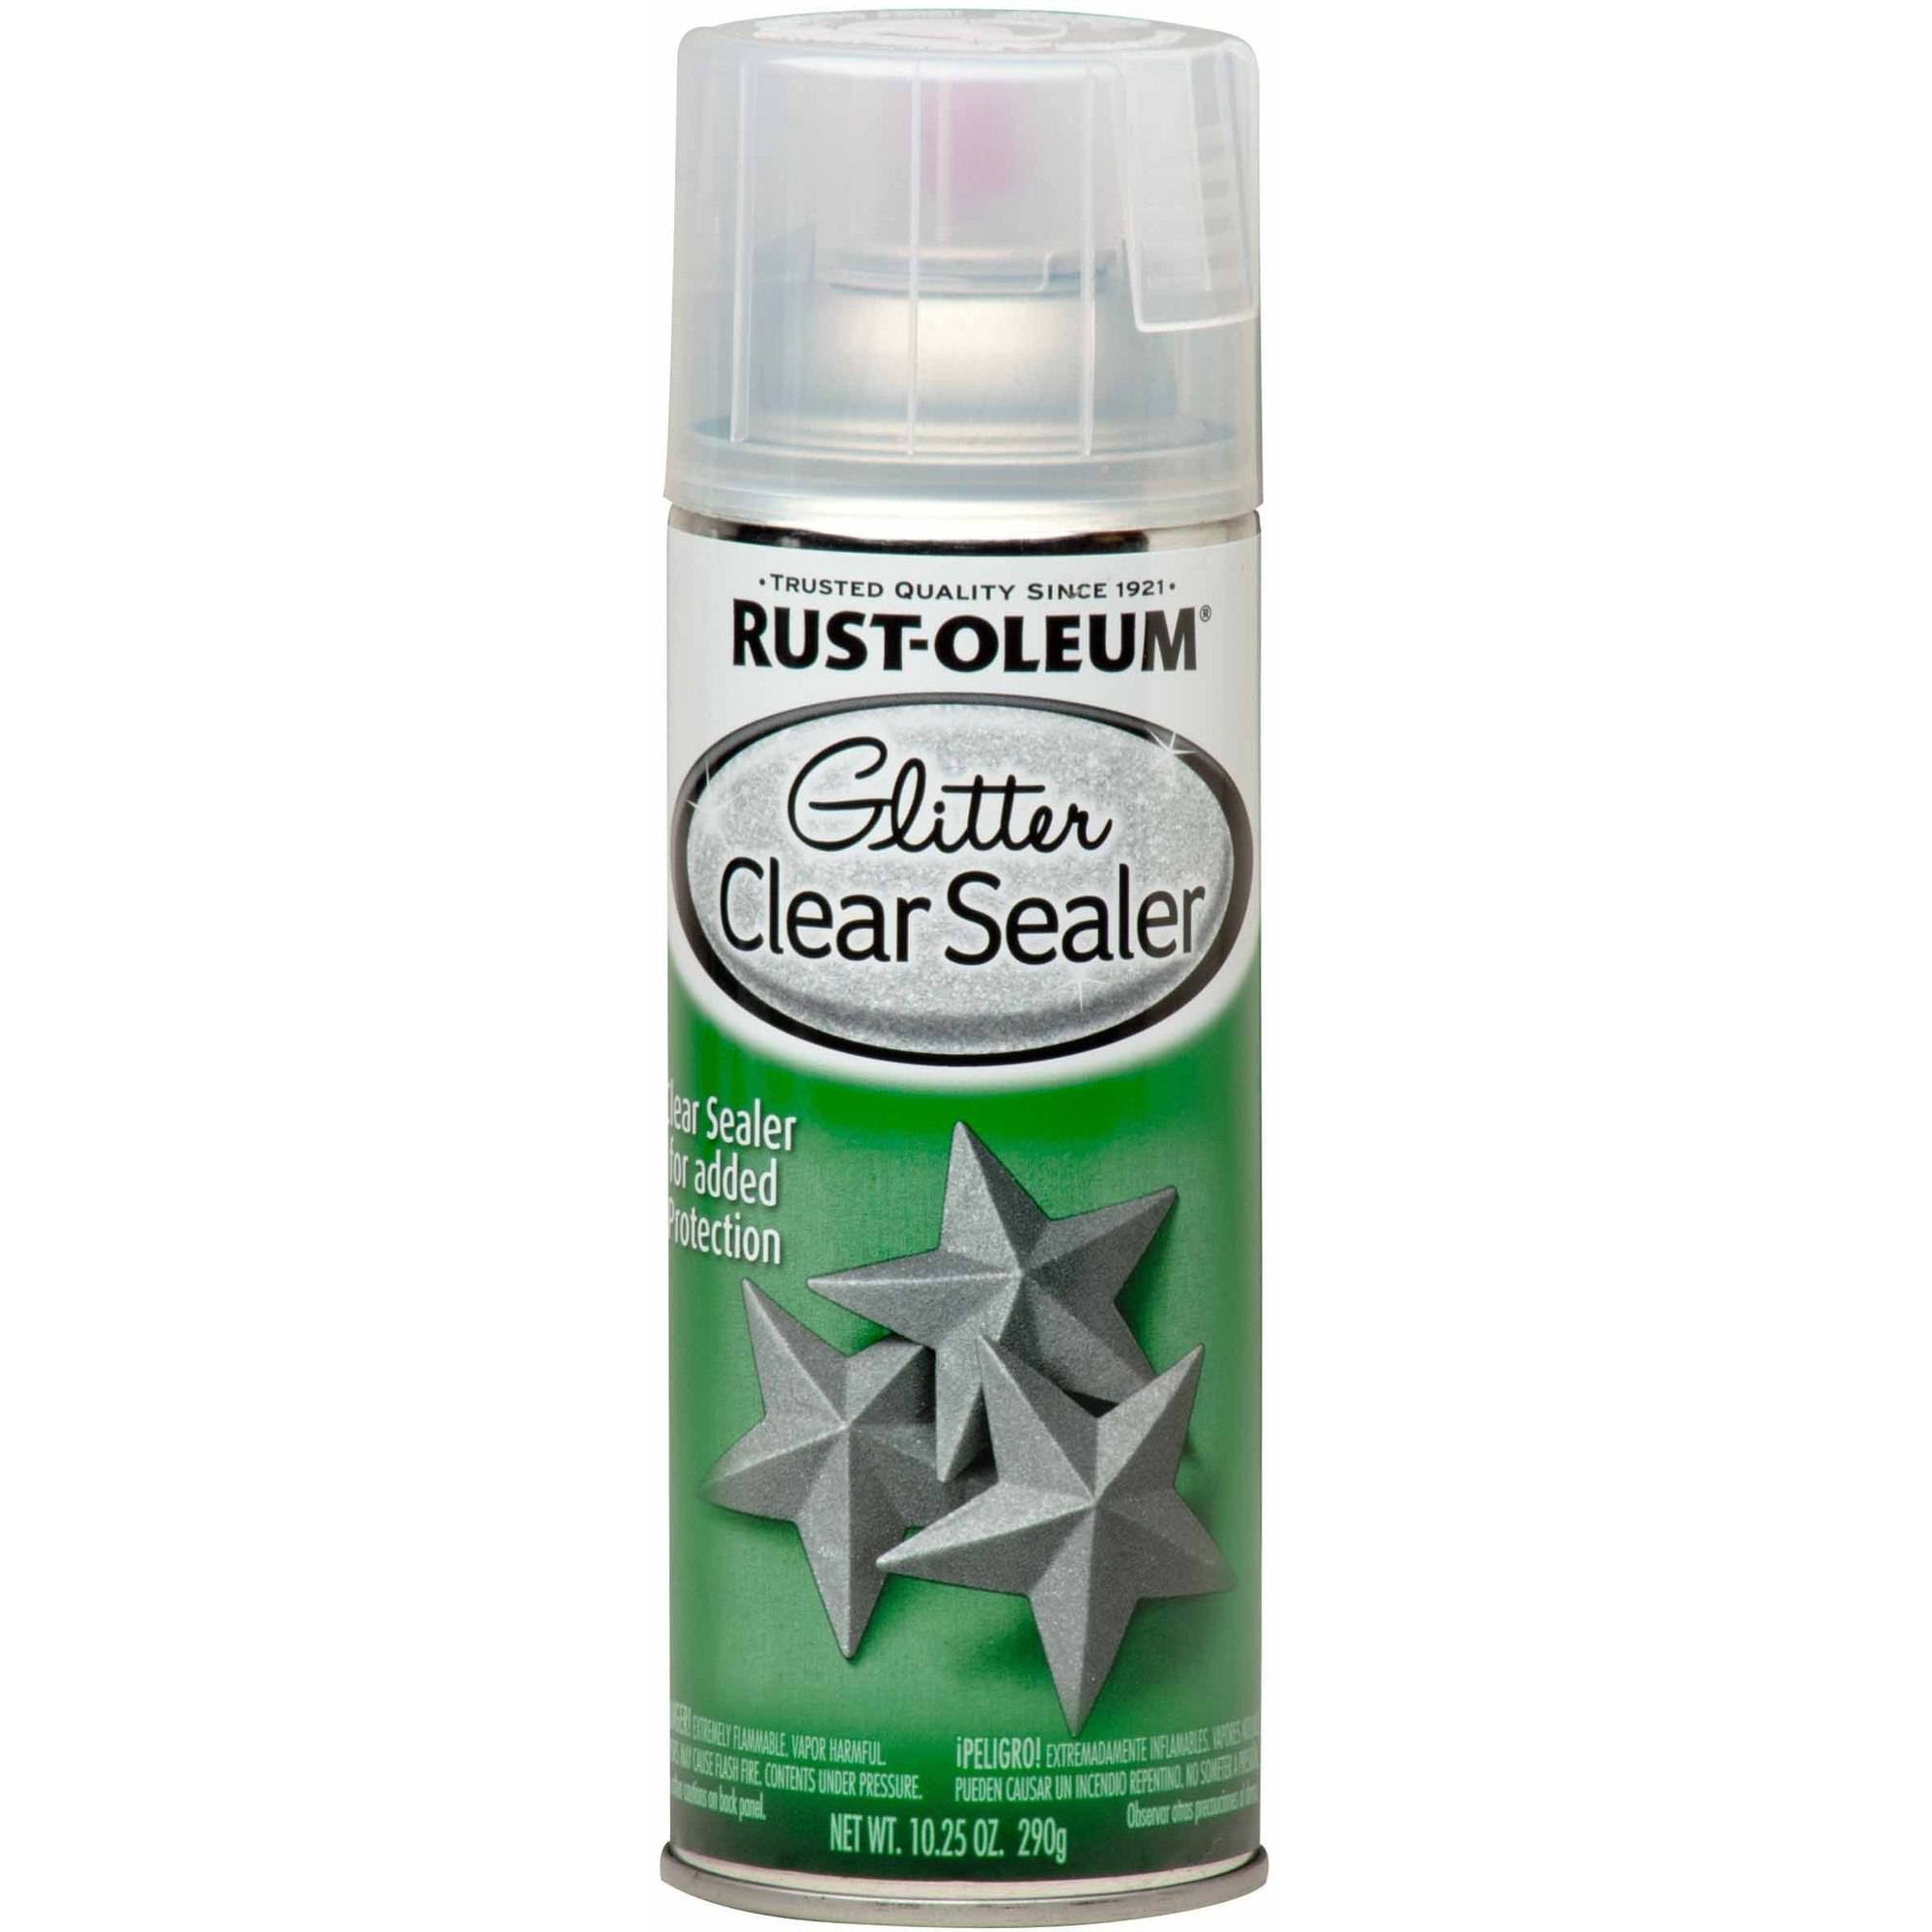 Rust-Oleum Glitter Clear Sealer Spray Paint - 10.25 oz